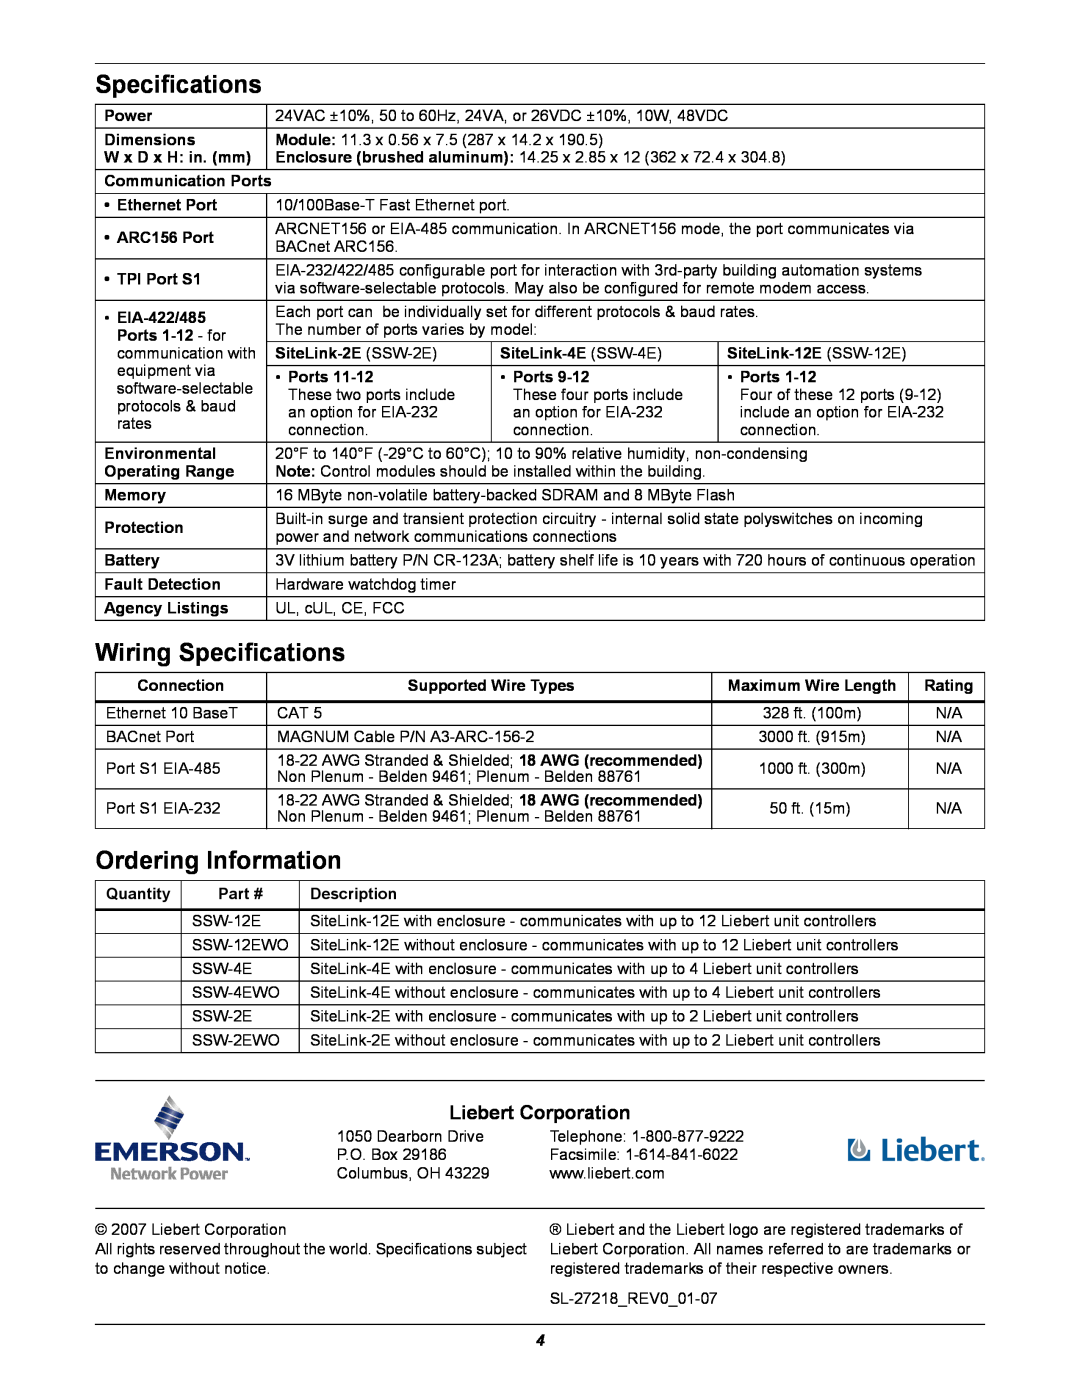 Emerson SiteLink-12E, SiteLink-2E, SiteLink-4E Wiring Specifications, Ordering Information, Liebert Corporation 